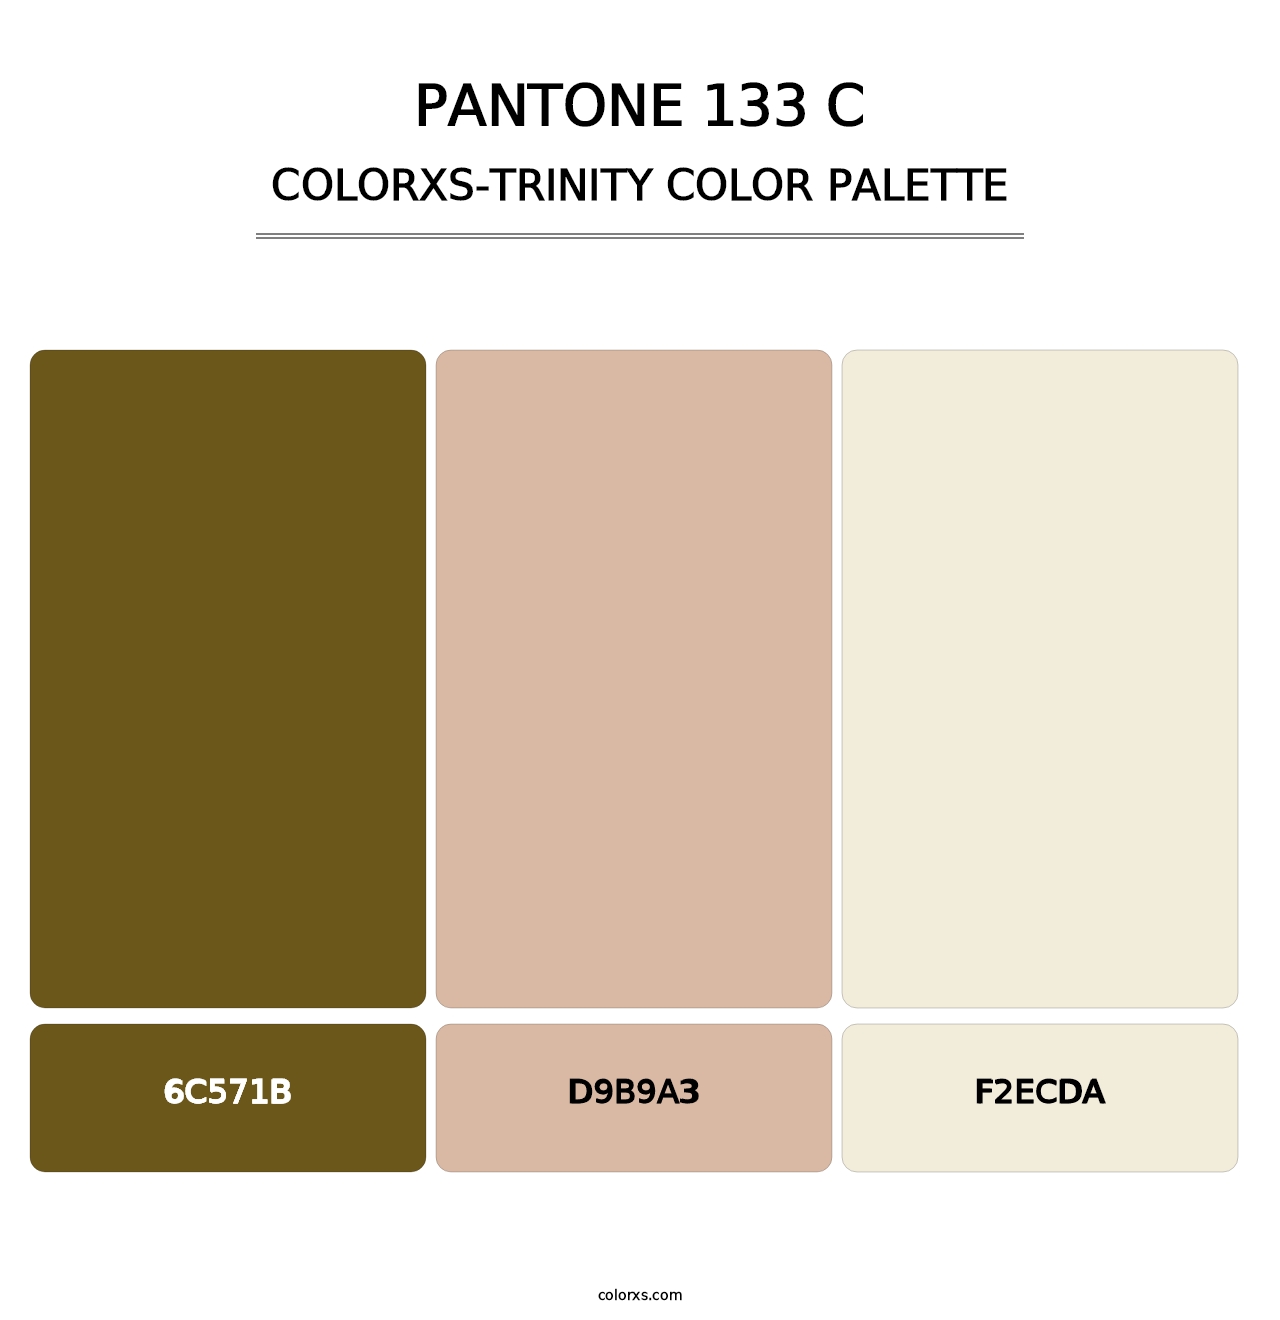 PANTONE 133 C - Colorxs Trinity Palette